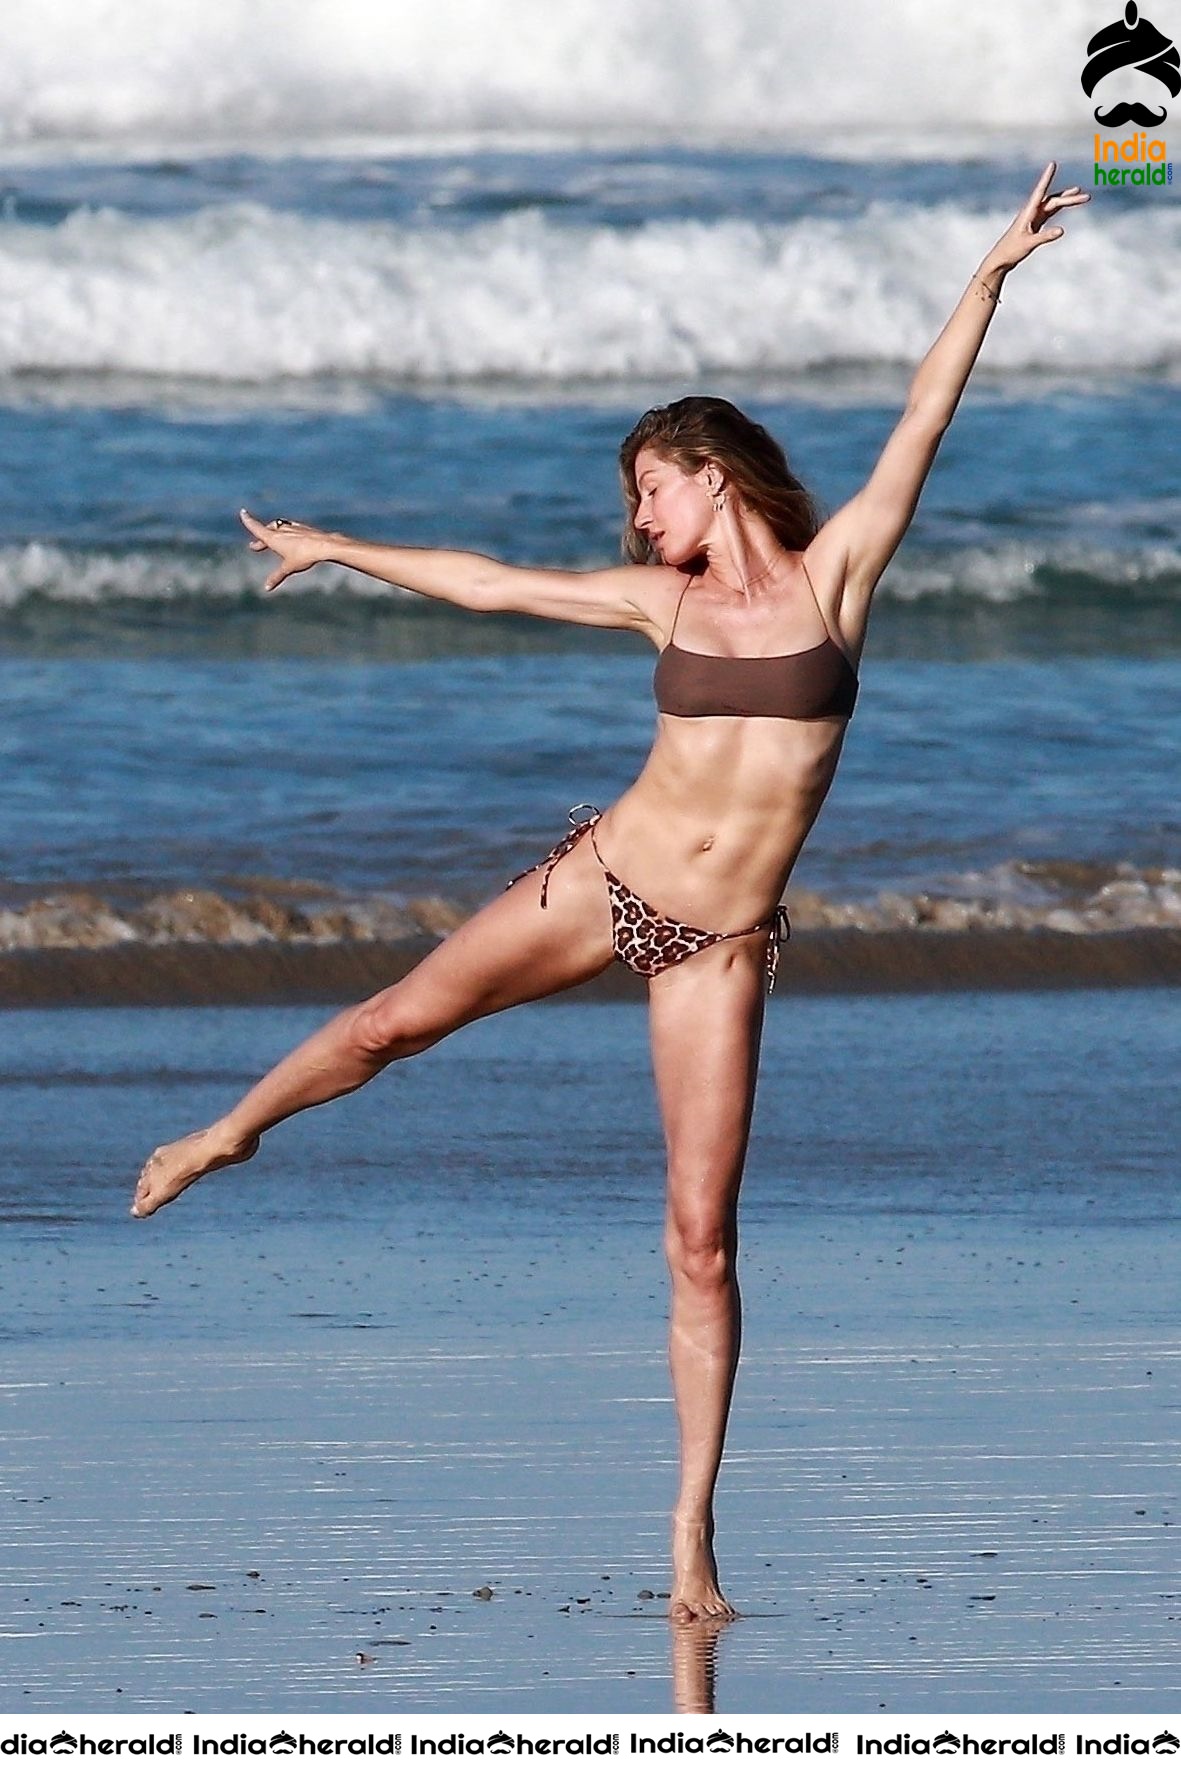 Gisele Bundchen during a Bikini photo shoot on the beach in Costa Rica Set 2